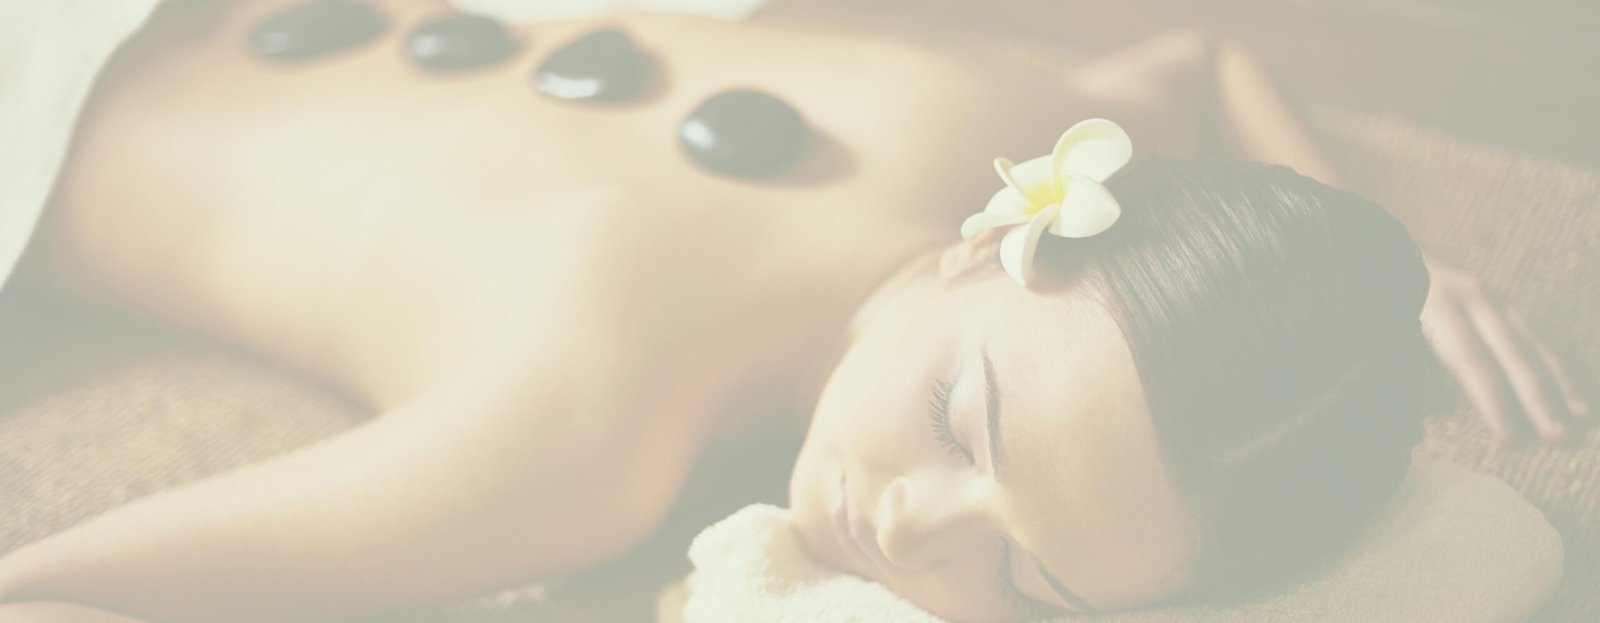 Hot Stone Massage Edmonton | AH Massage & Acupuncture